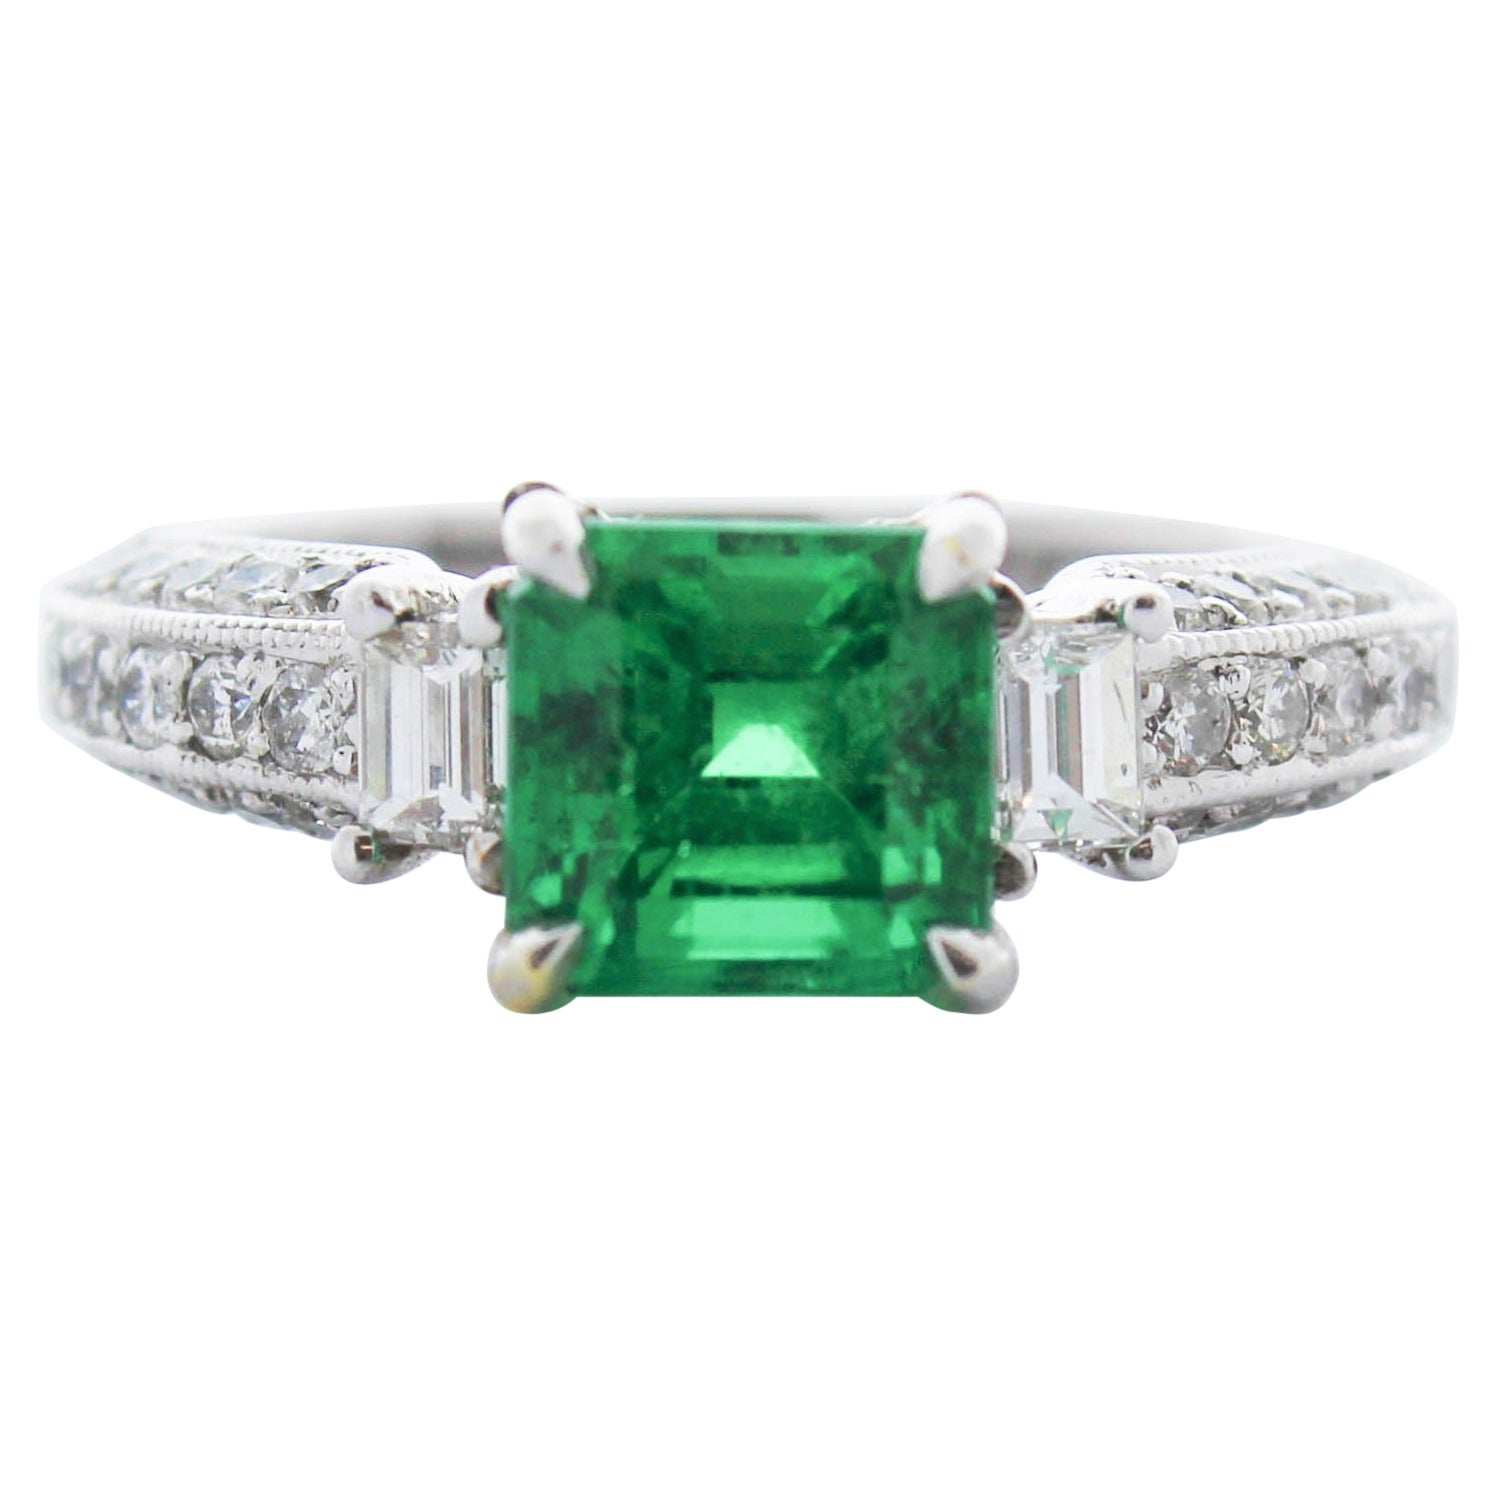 1.85 Carat Square Emerald & Diamond Cocktail Ring in 14 K White Gold